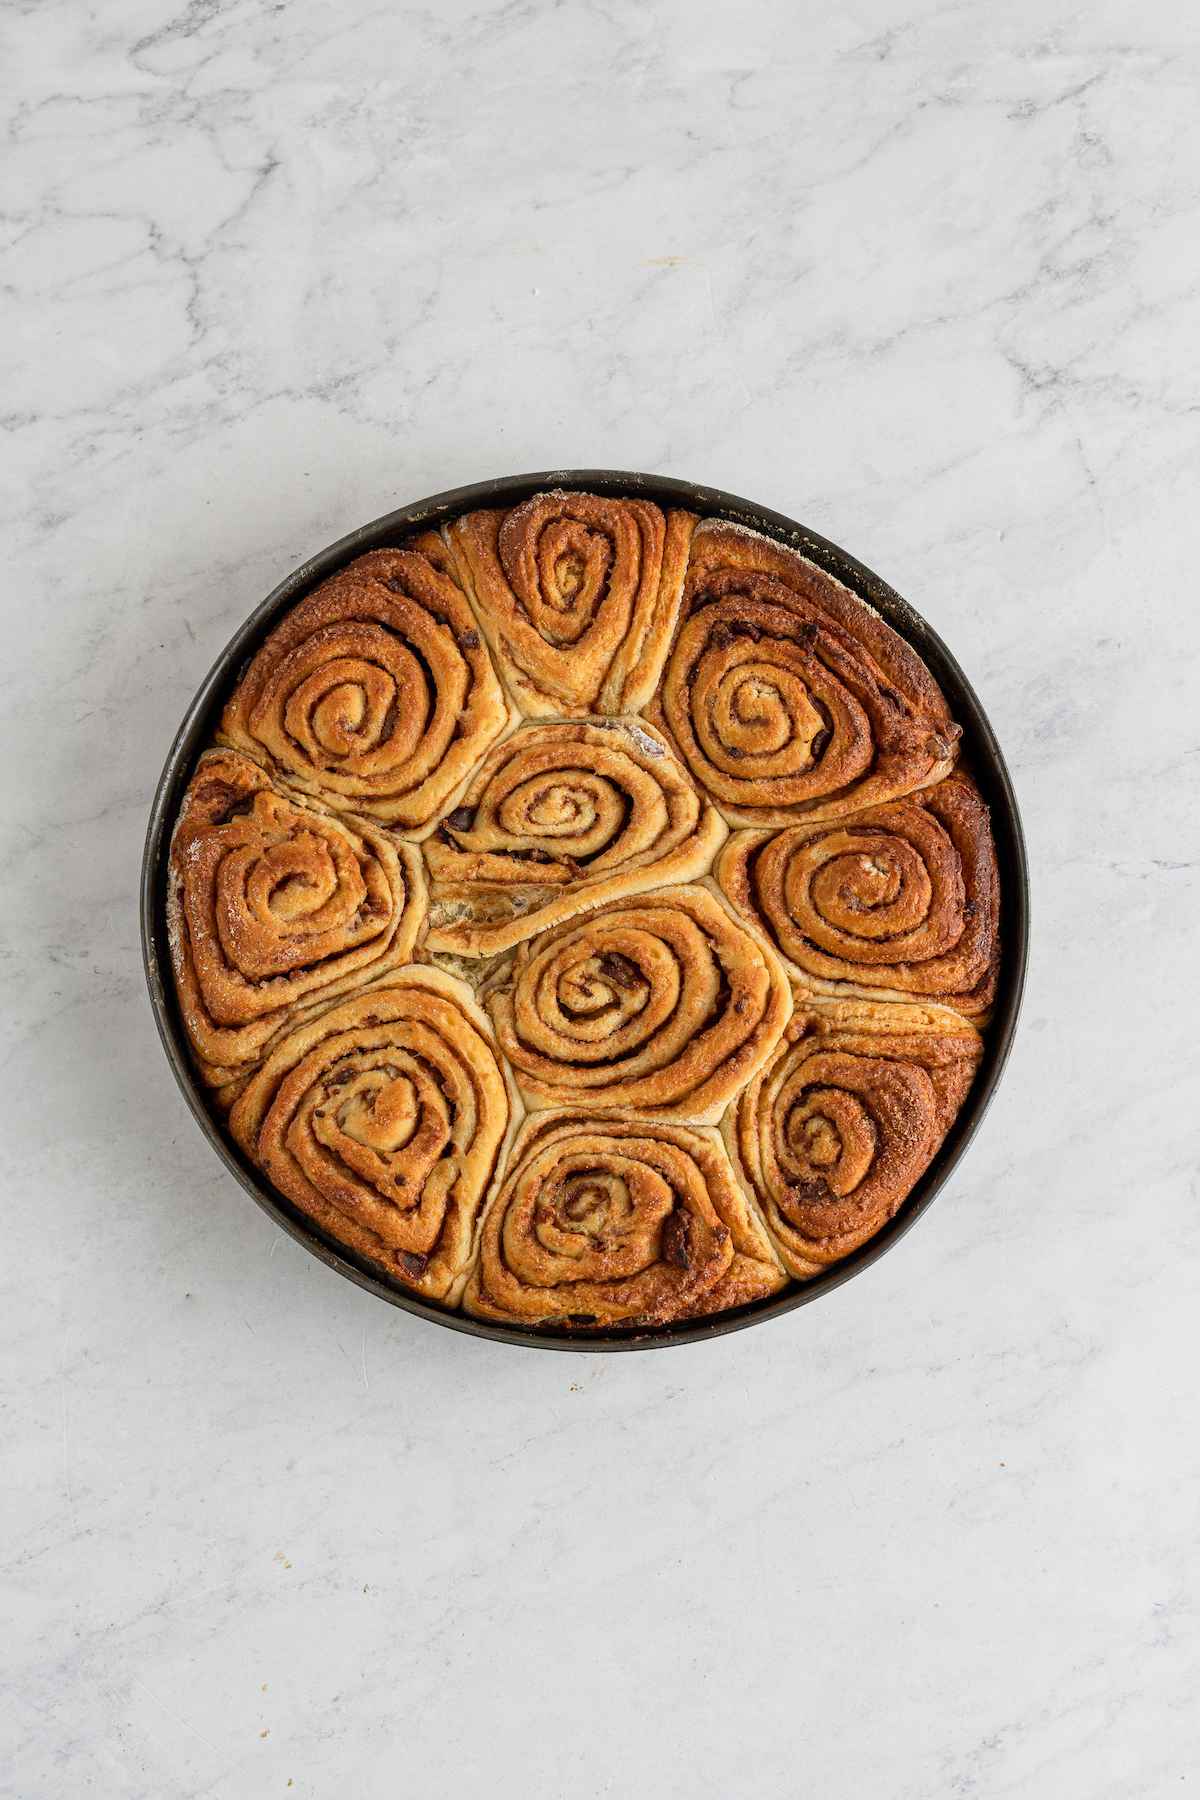 Baked, golden-brown cinnamon rolls in a pan.